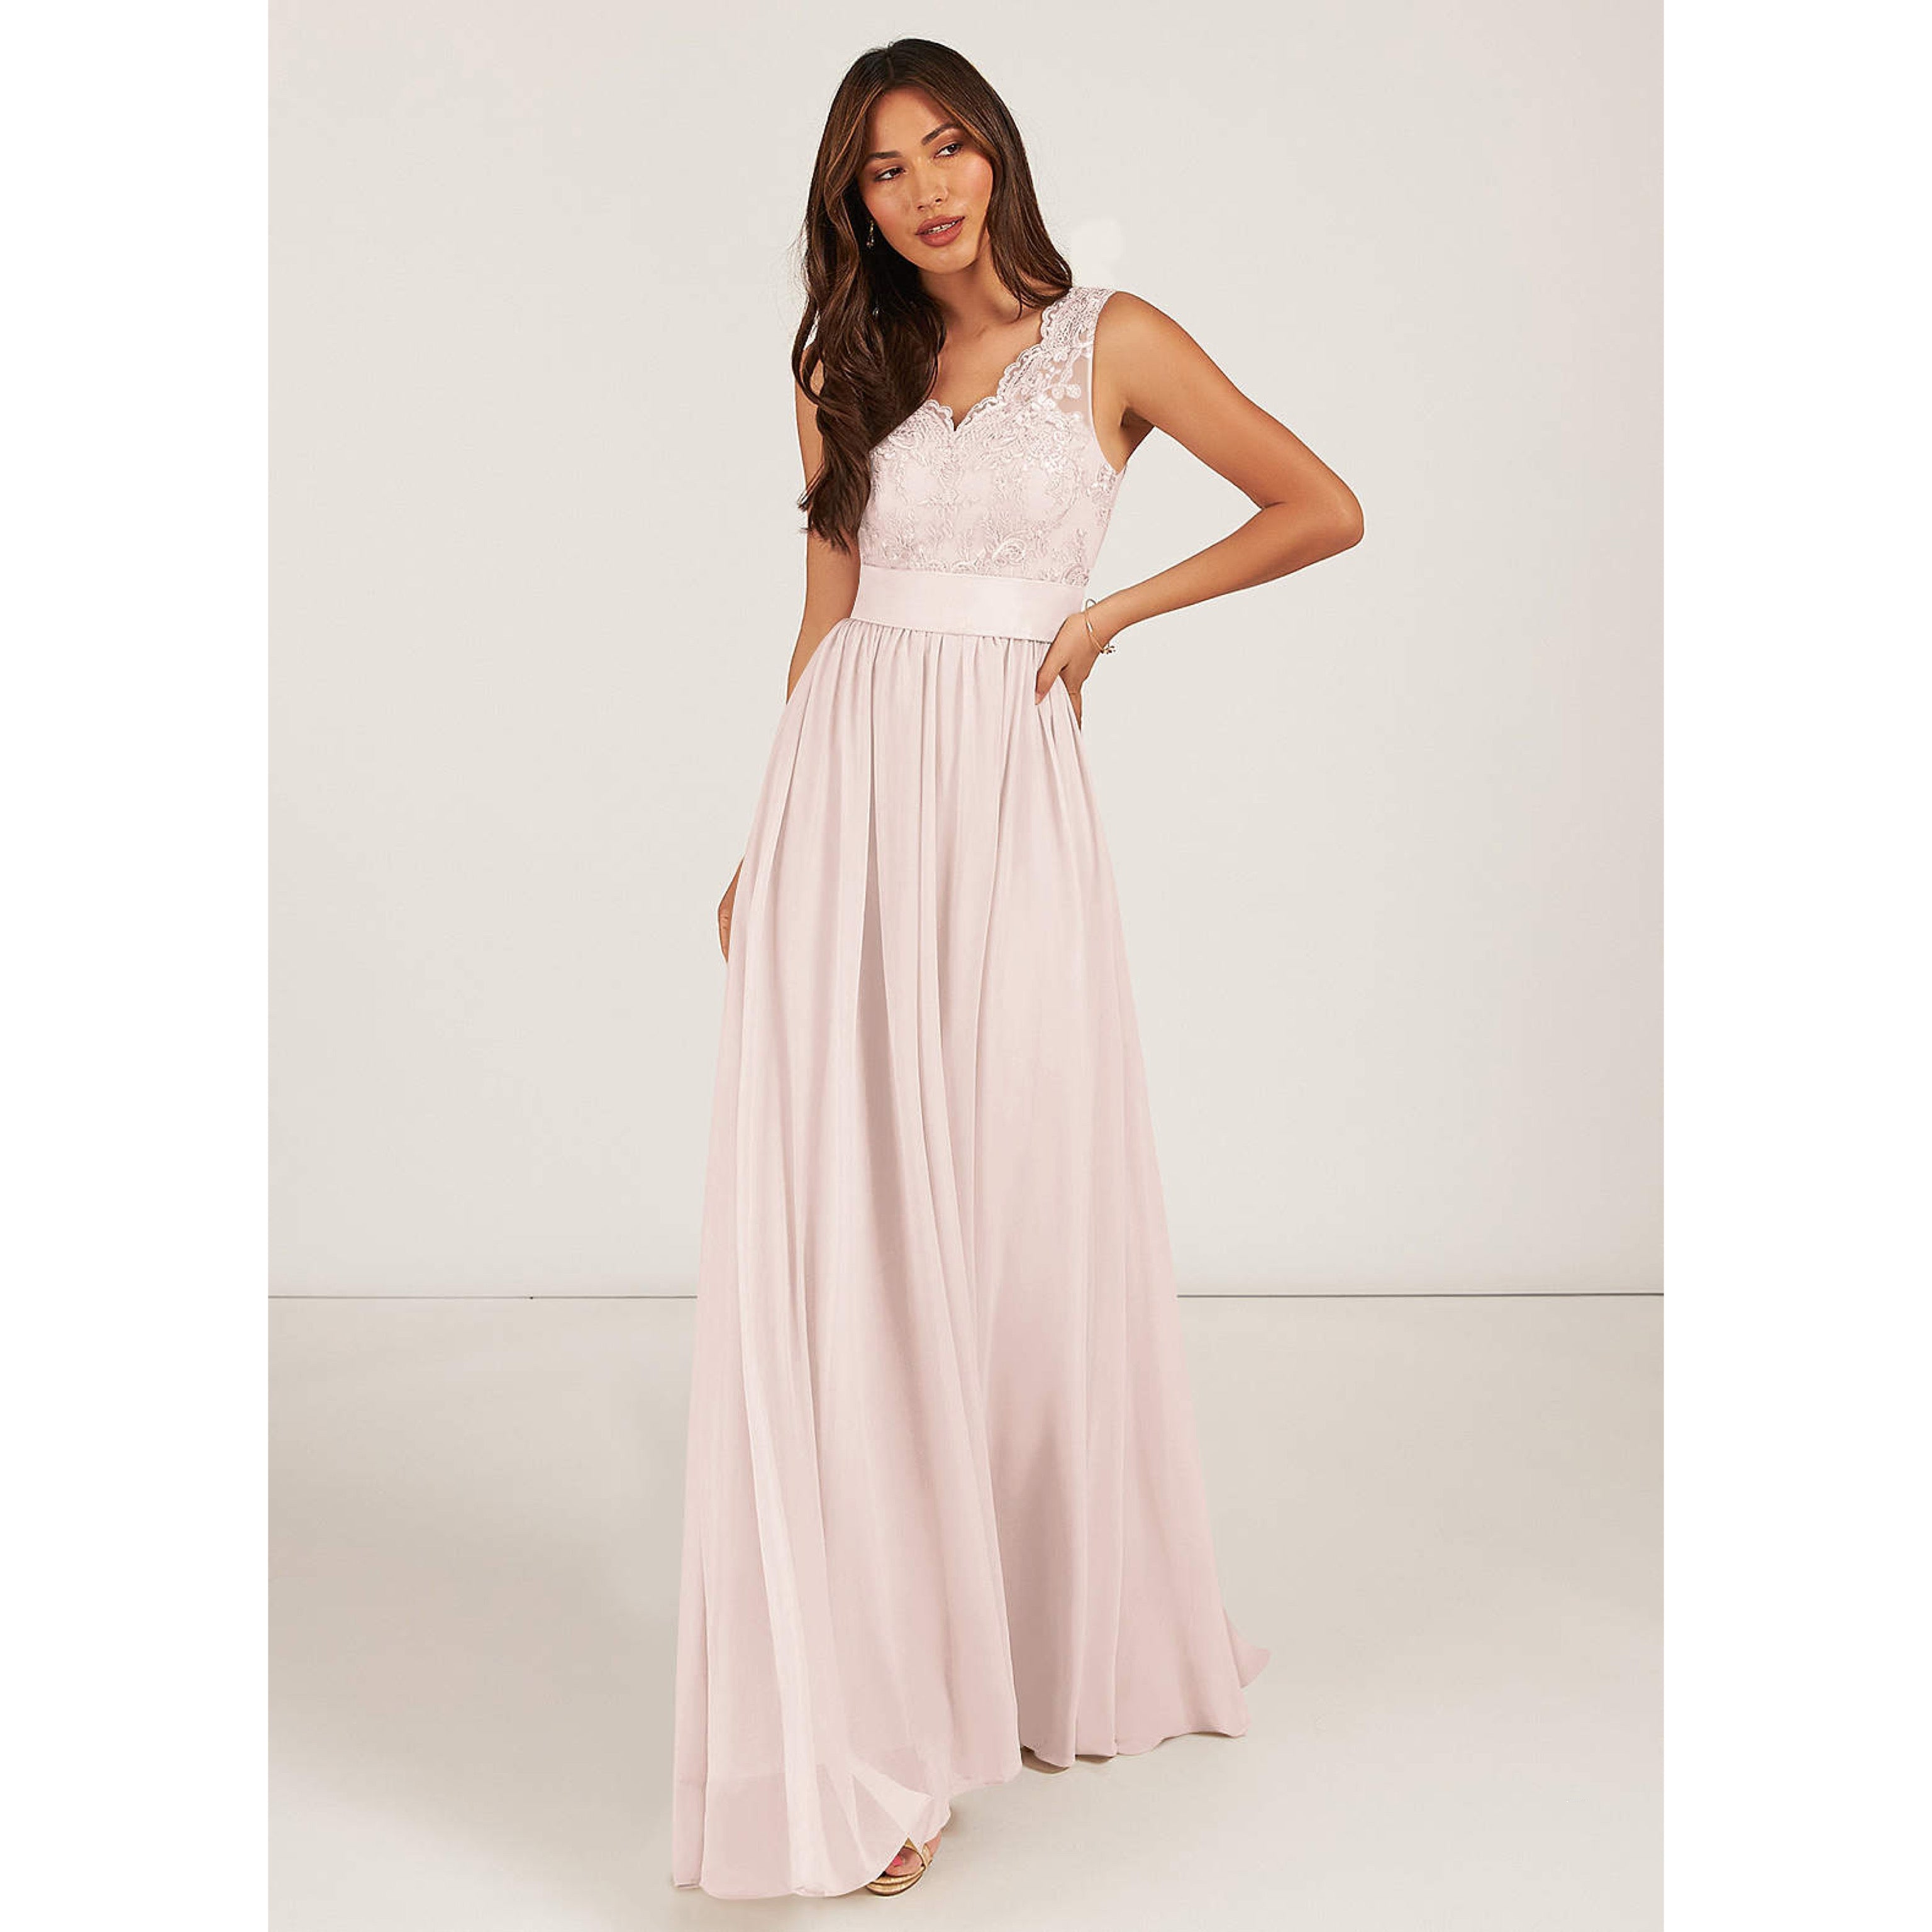 Azazie pale pink dress, size 24